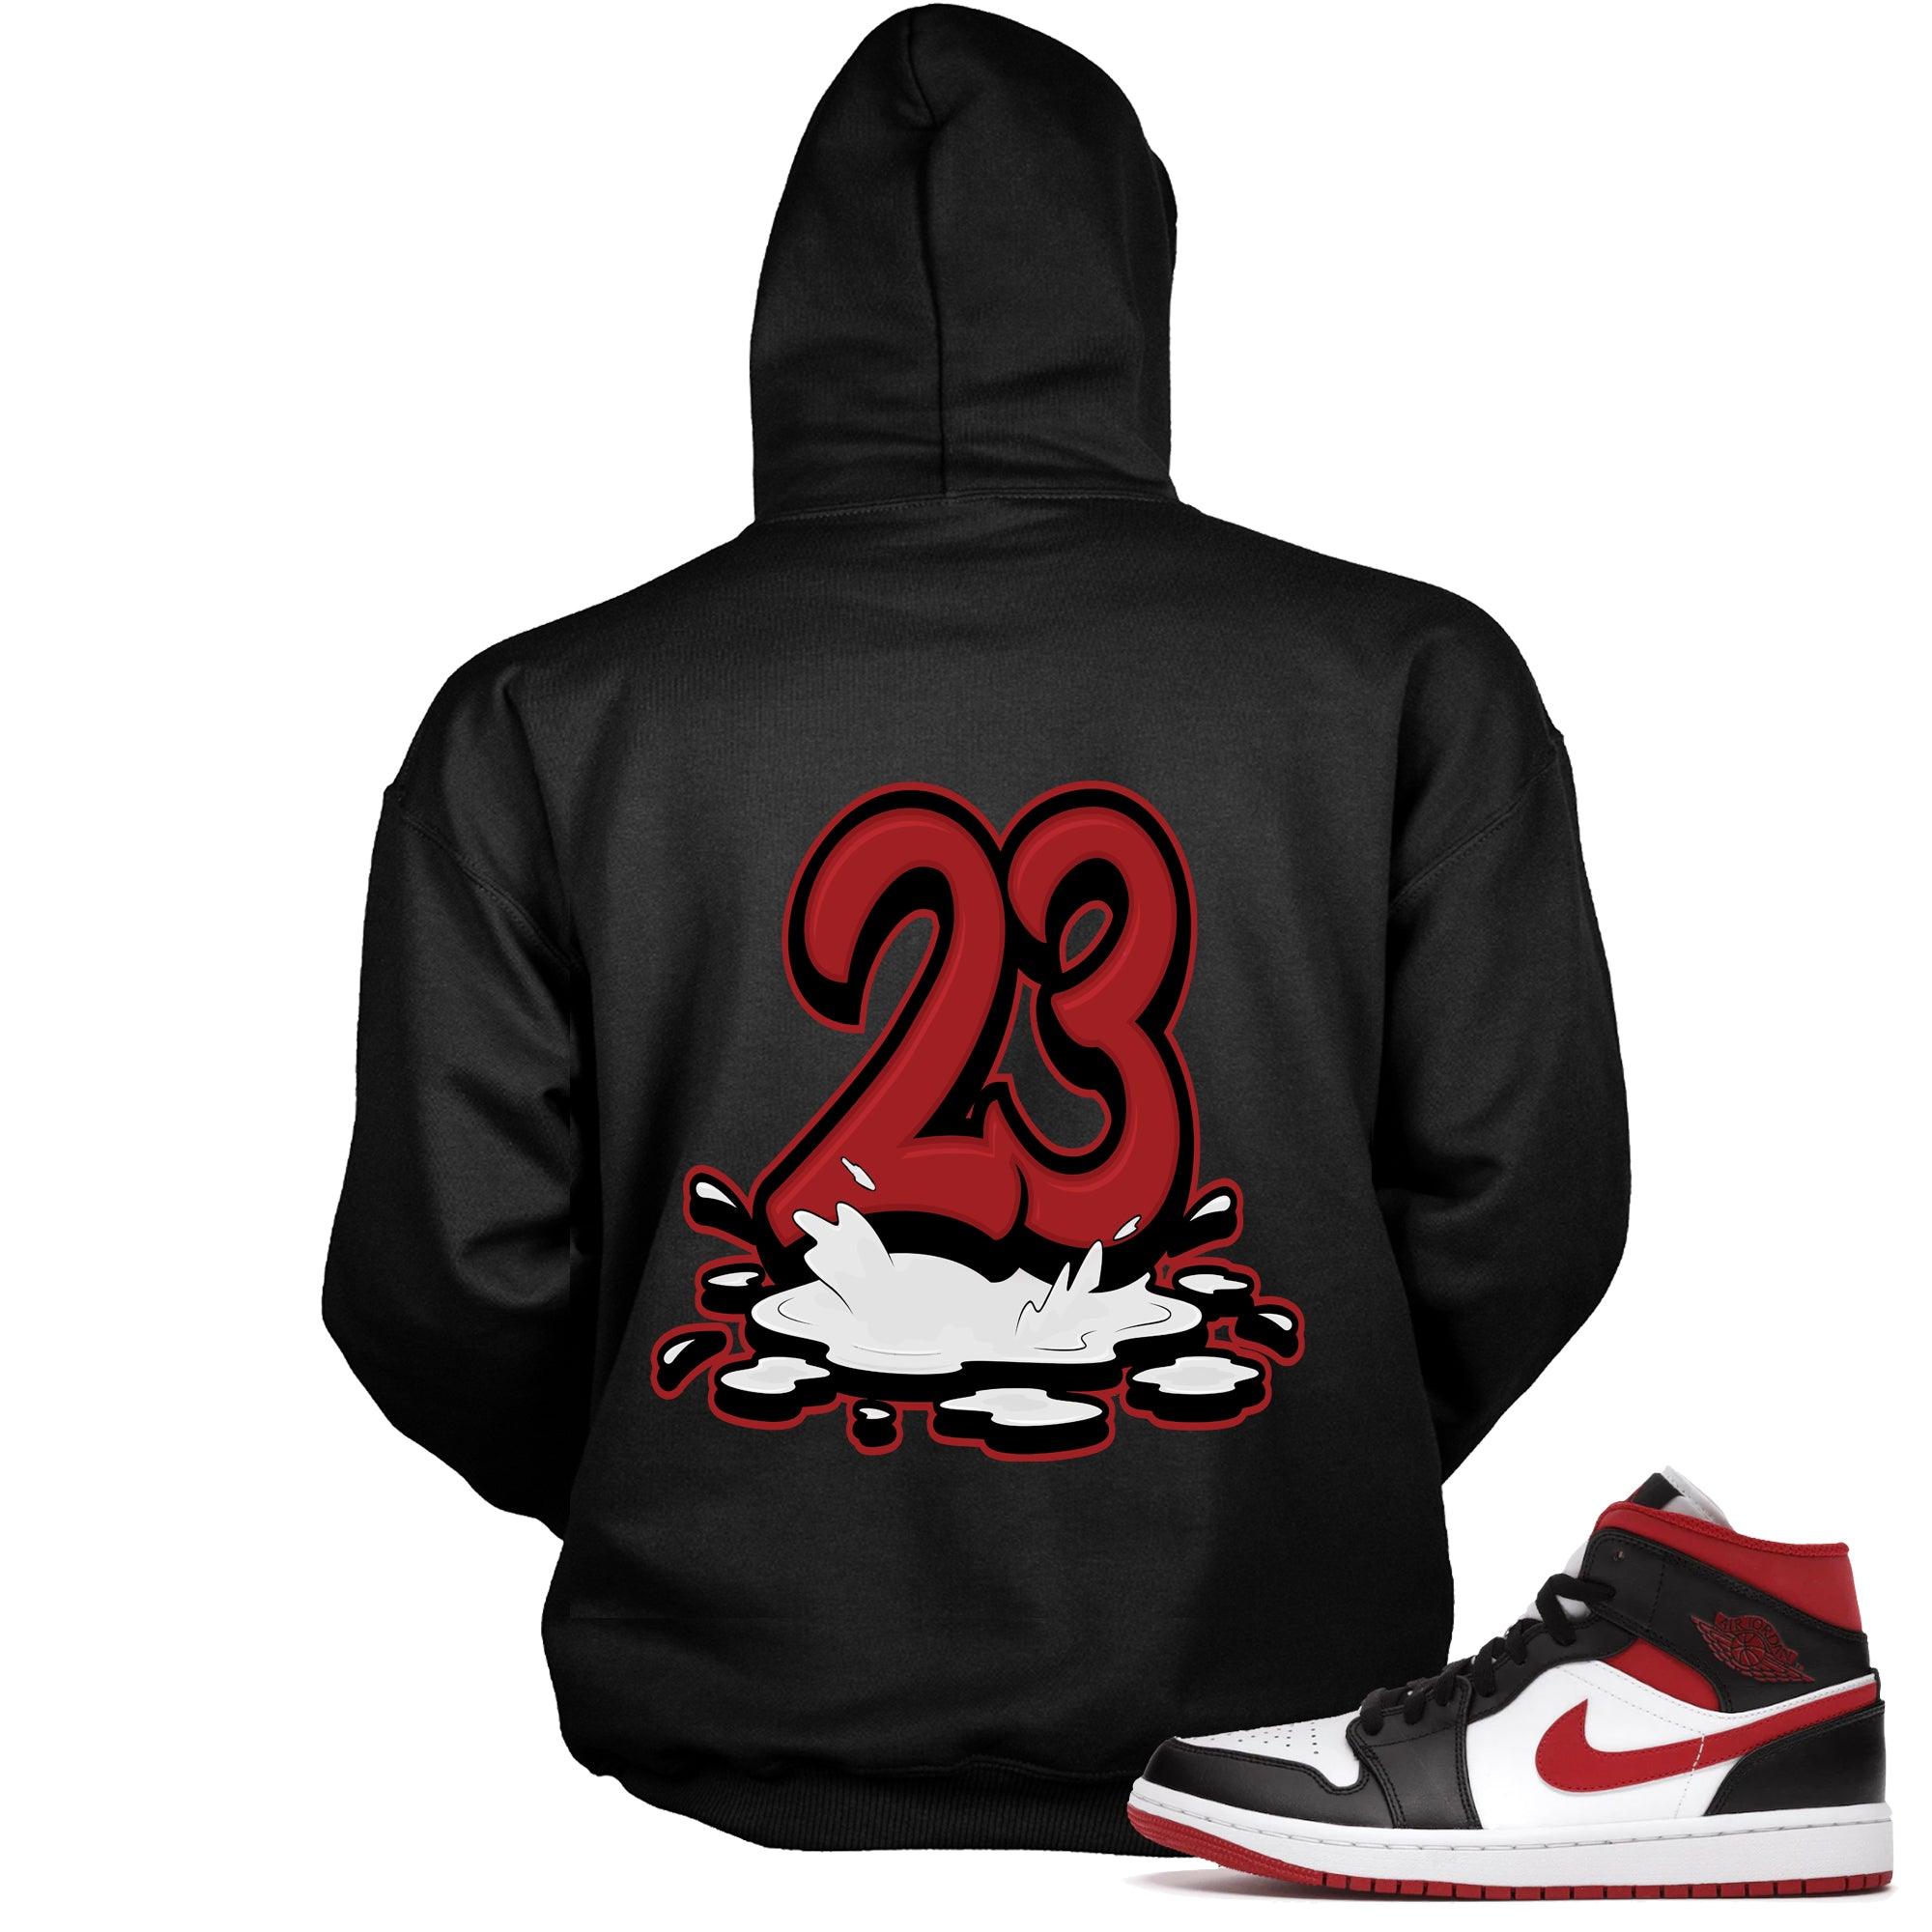 23 Melting Sneaker Sweatshirt AJ 1 Mid Gym Red Black White photo